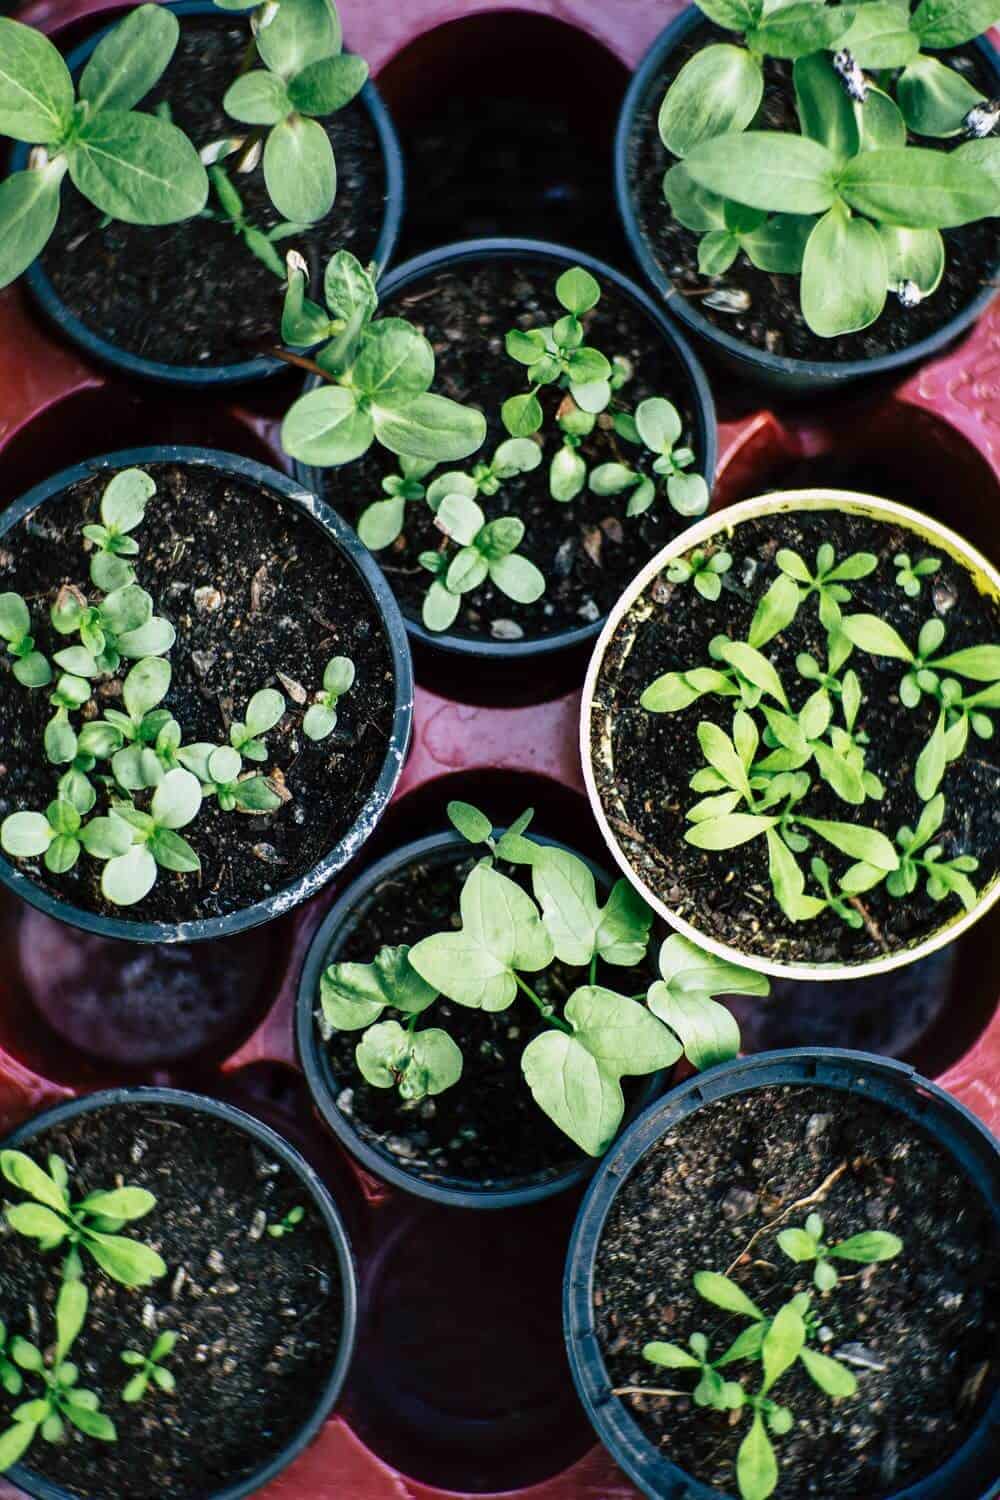 Basil growing in pots